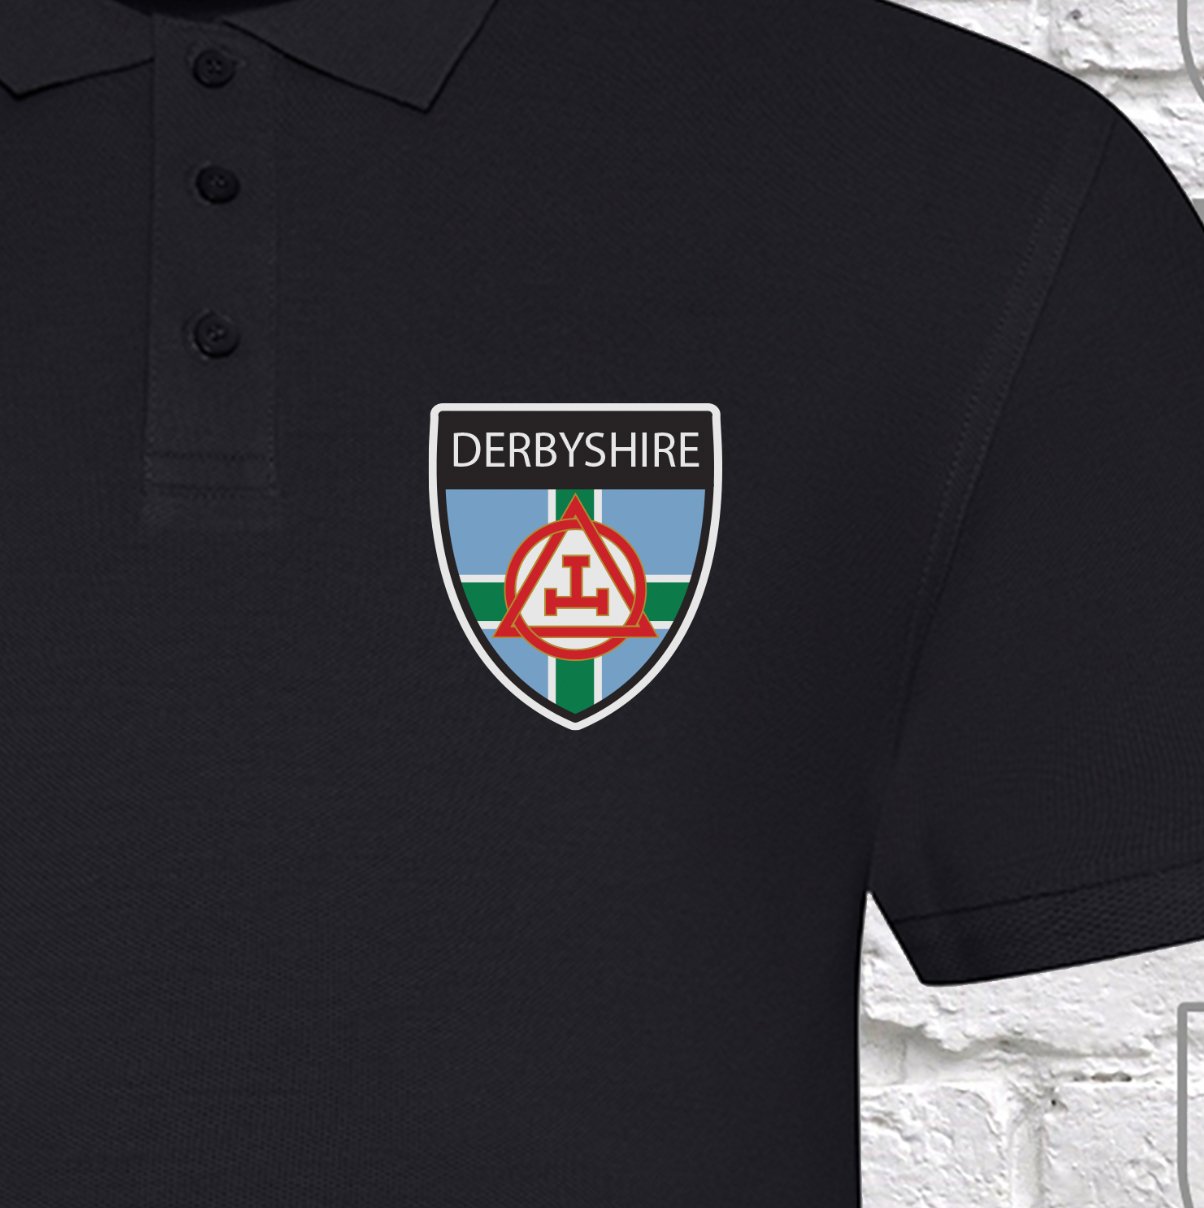 Derbyshire Holy Royal Arch Premium Polo Shirt redplume